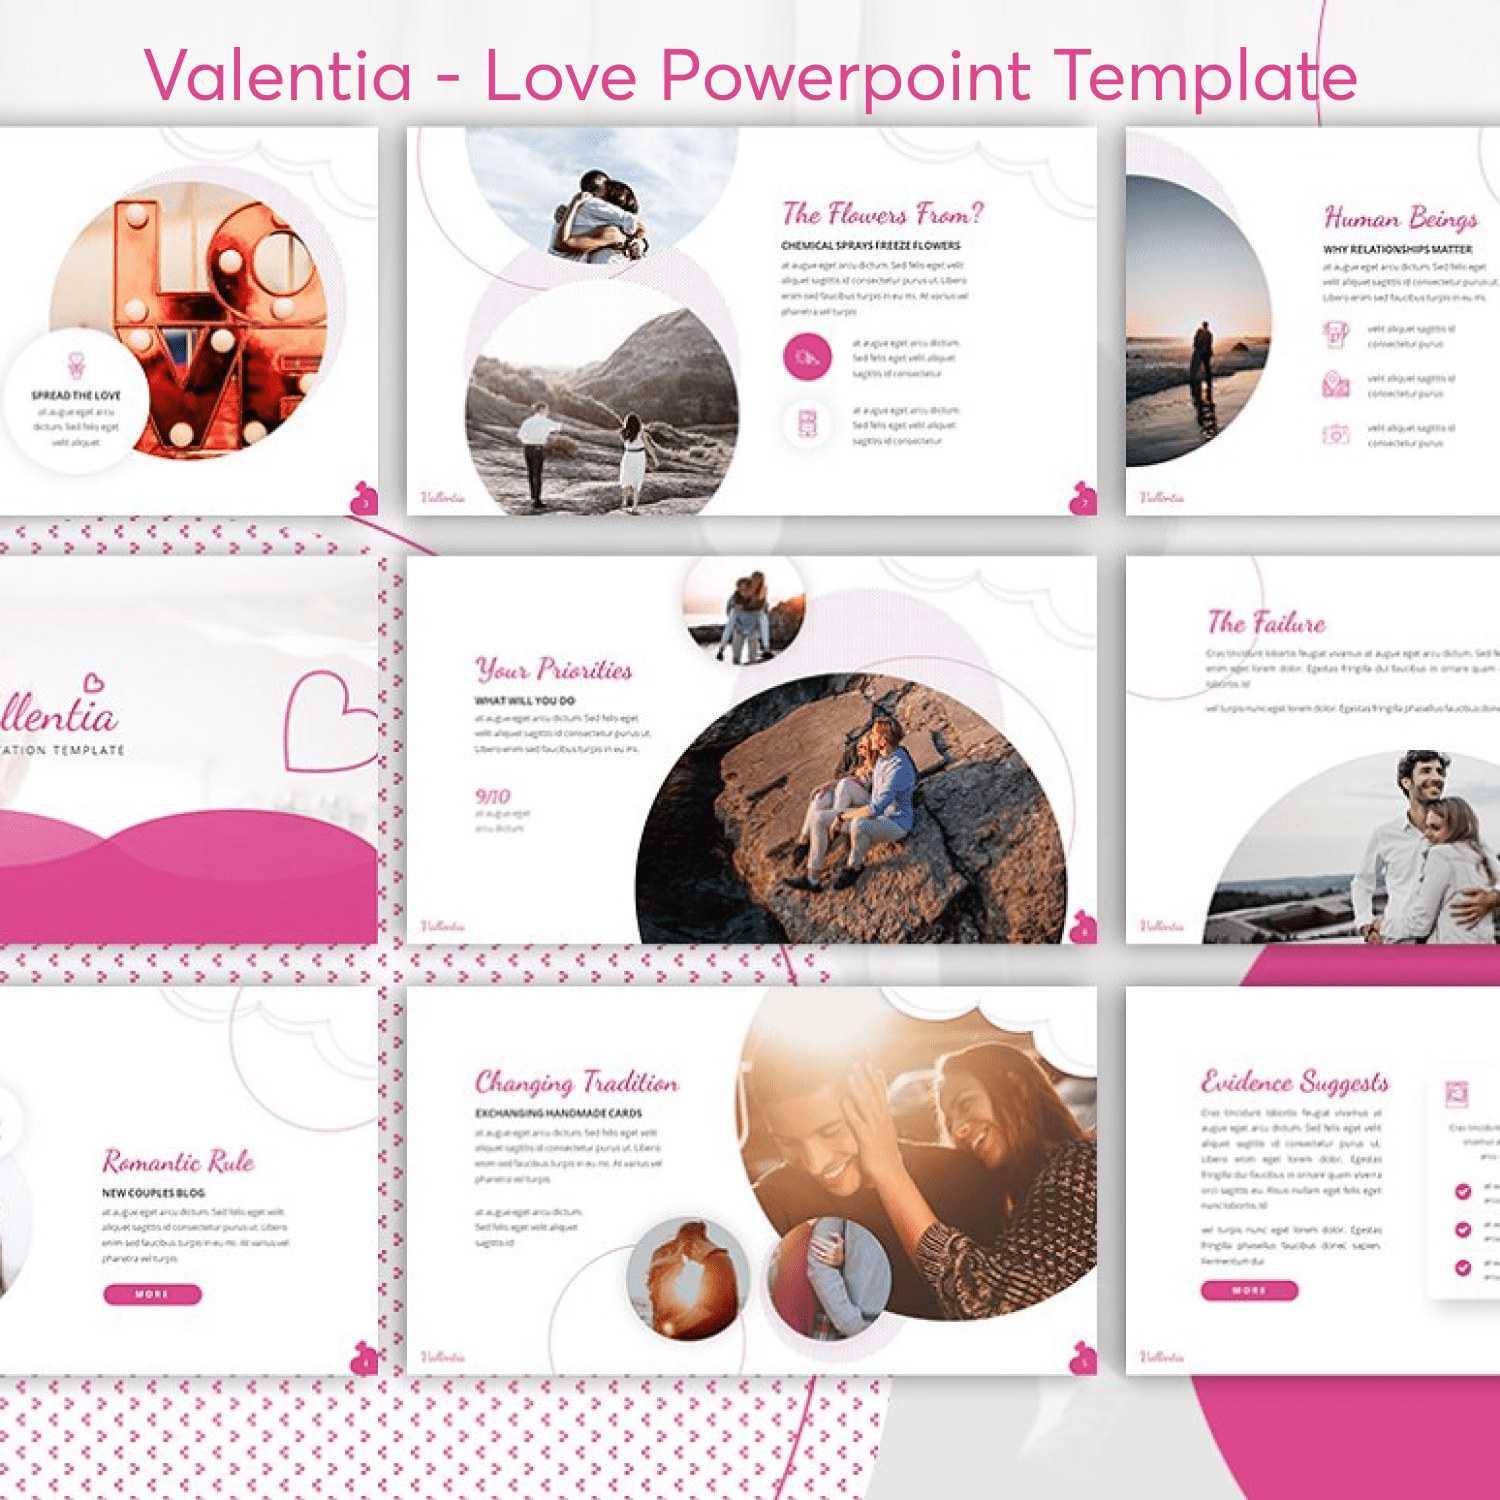 Valentia - Love Powerpoint Template Example.